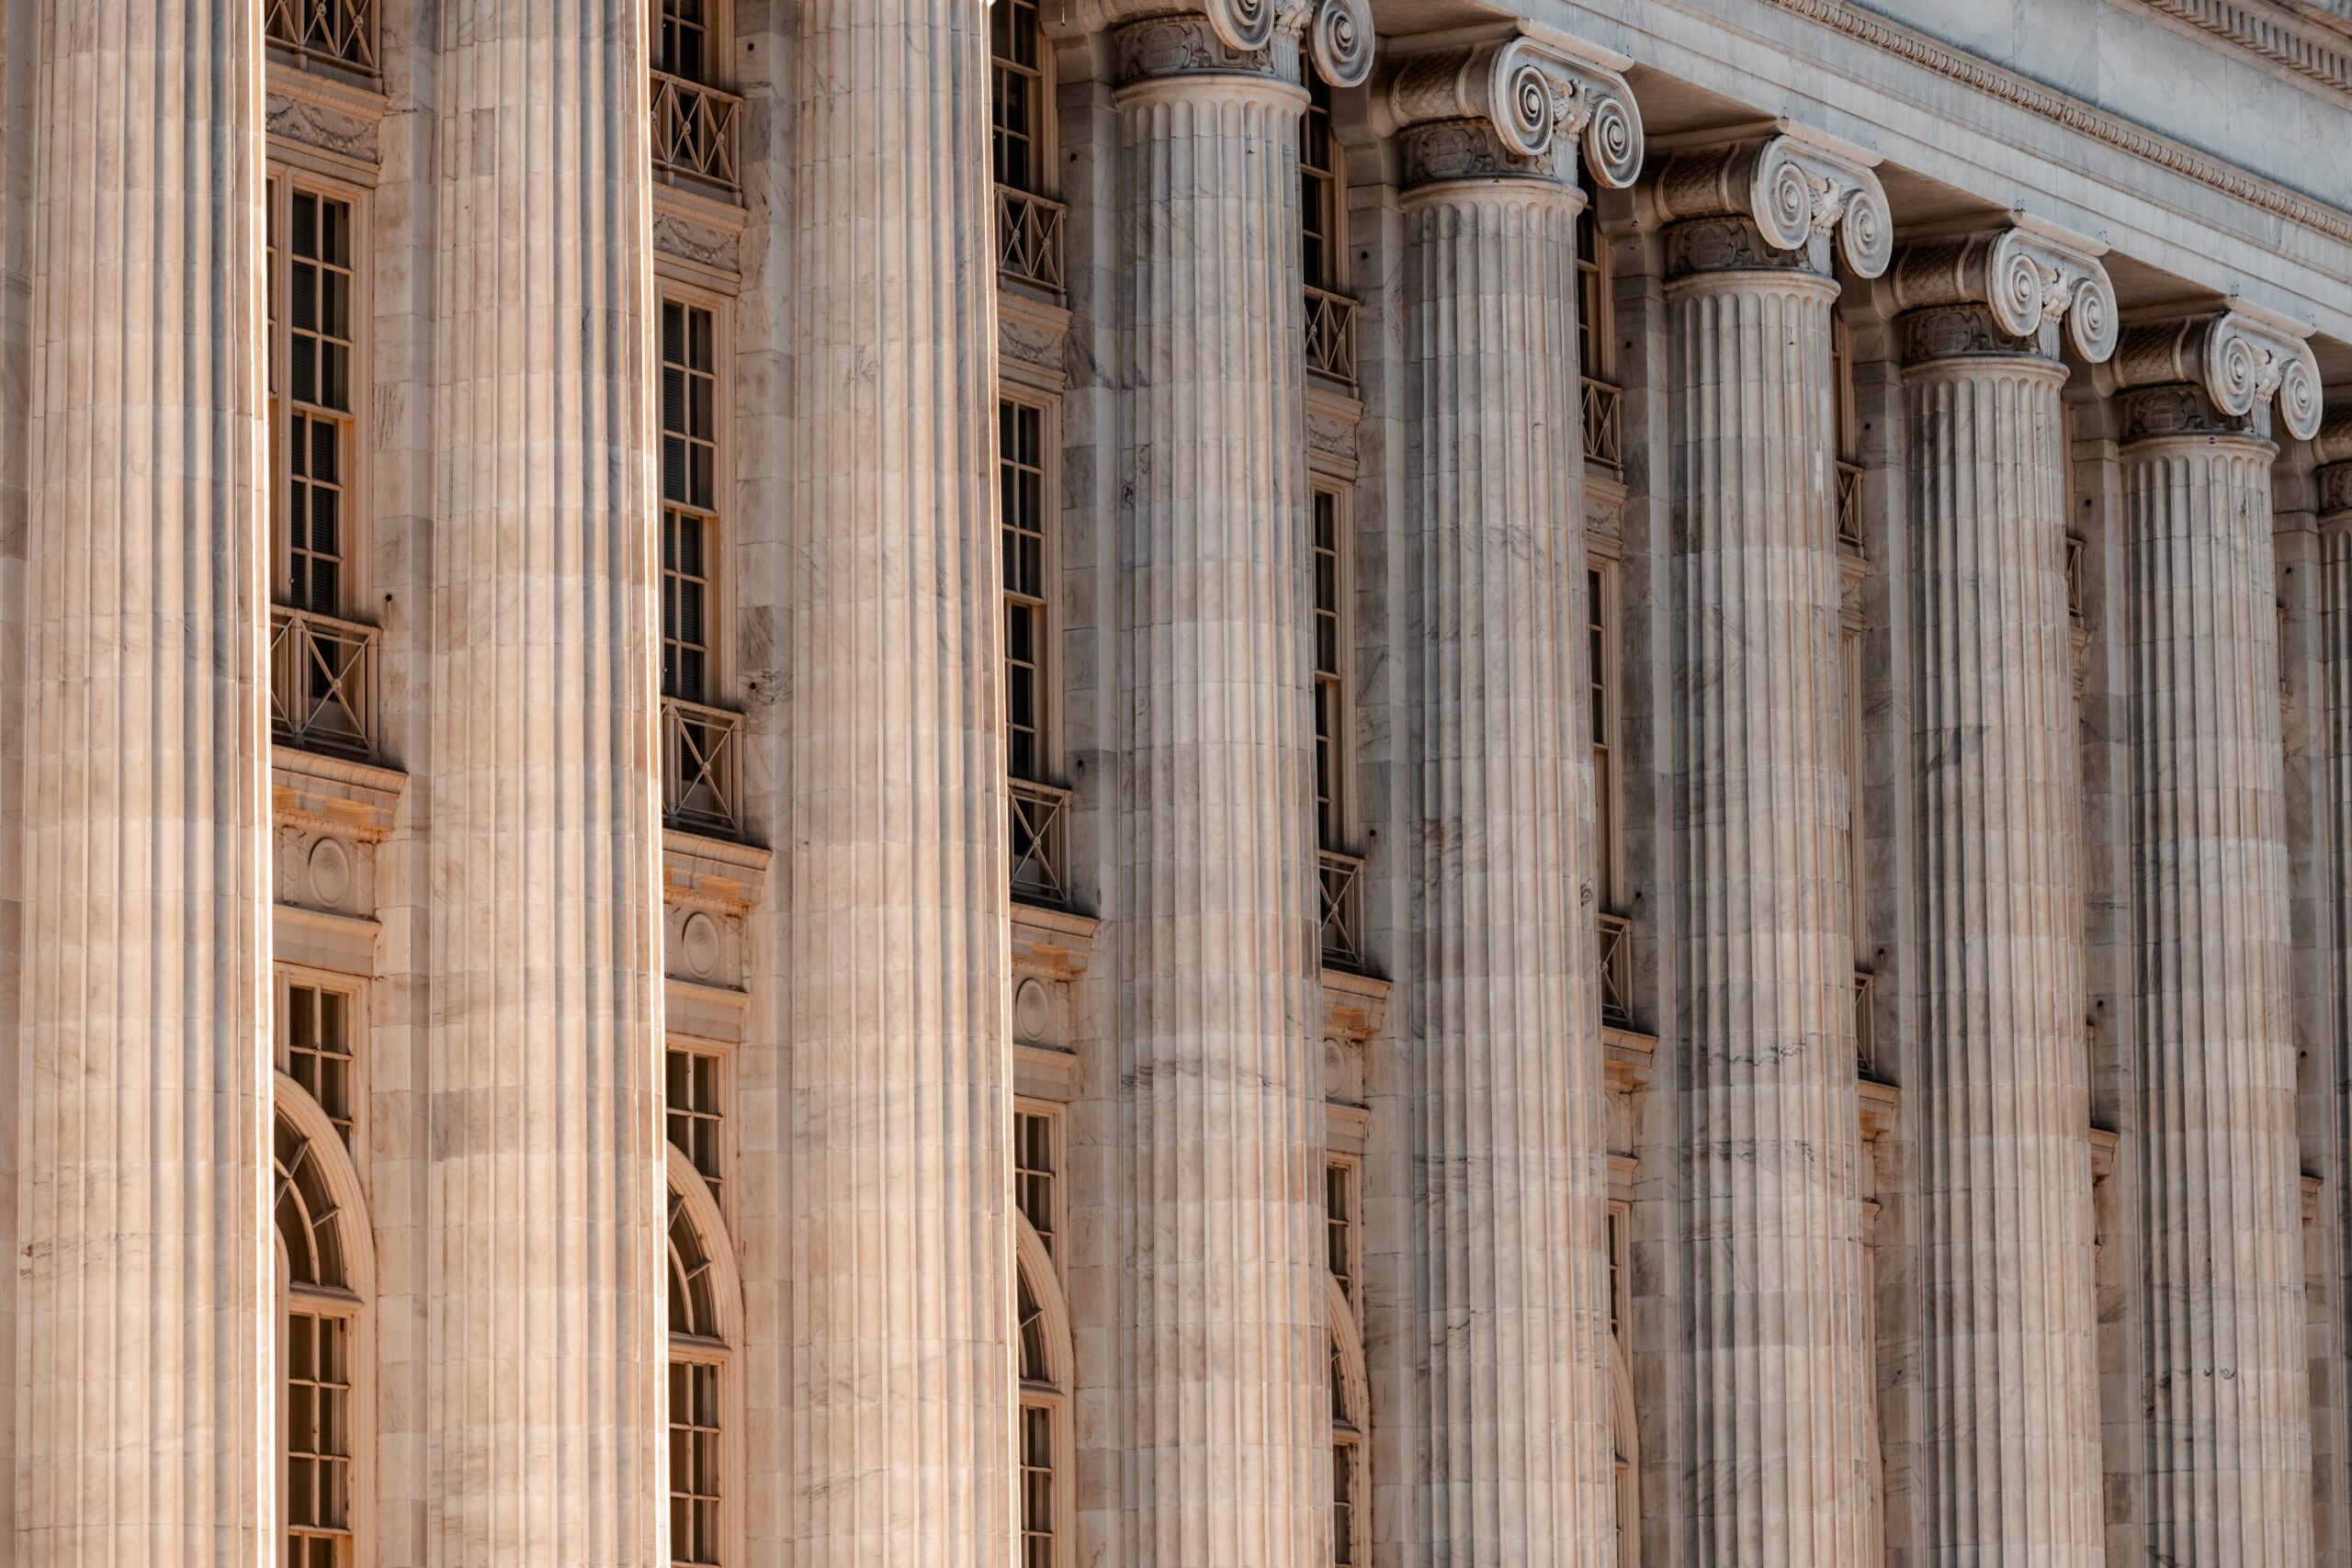 Pillars of the Supreme Court